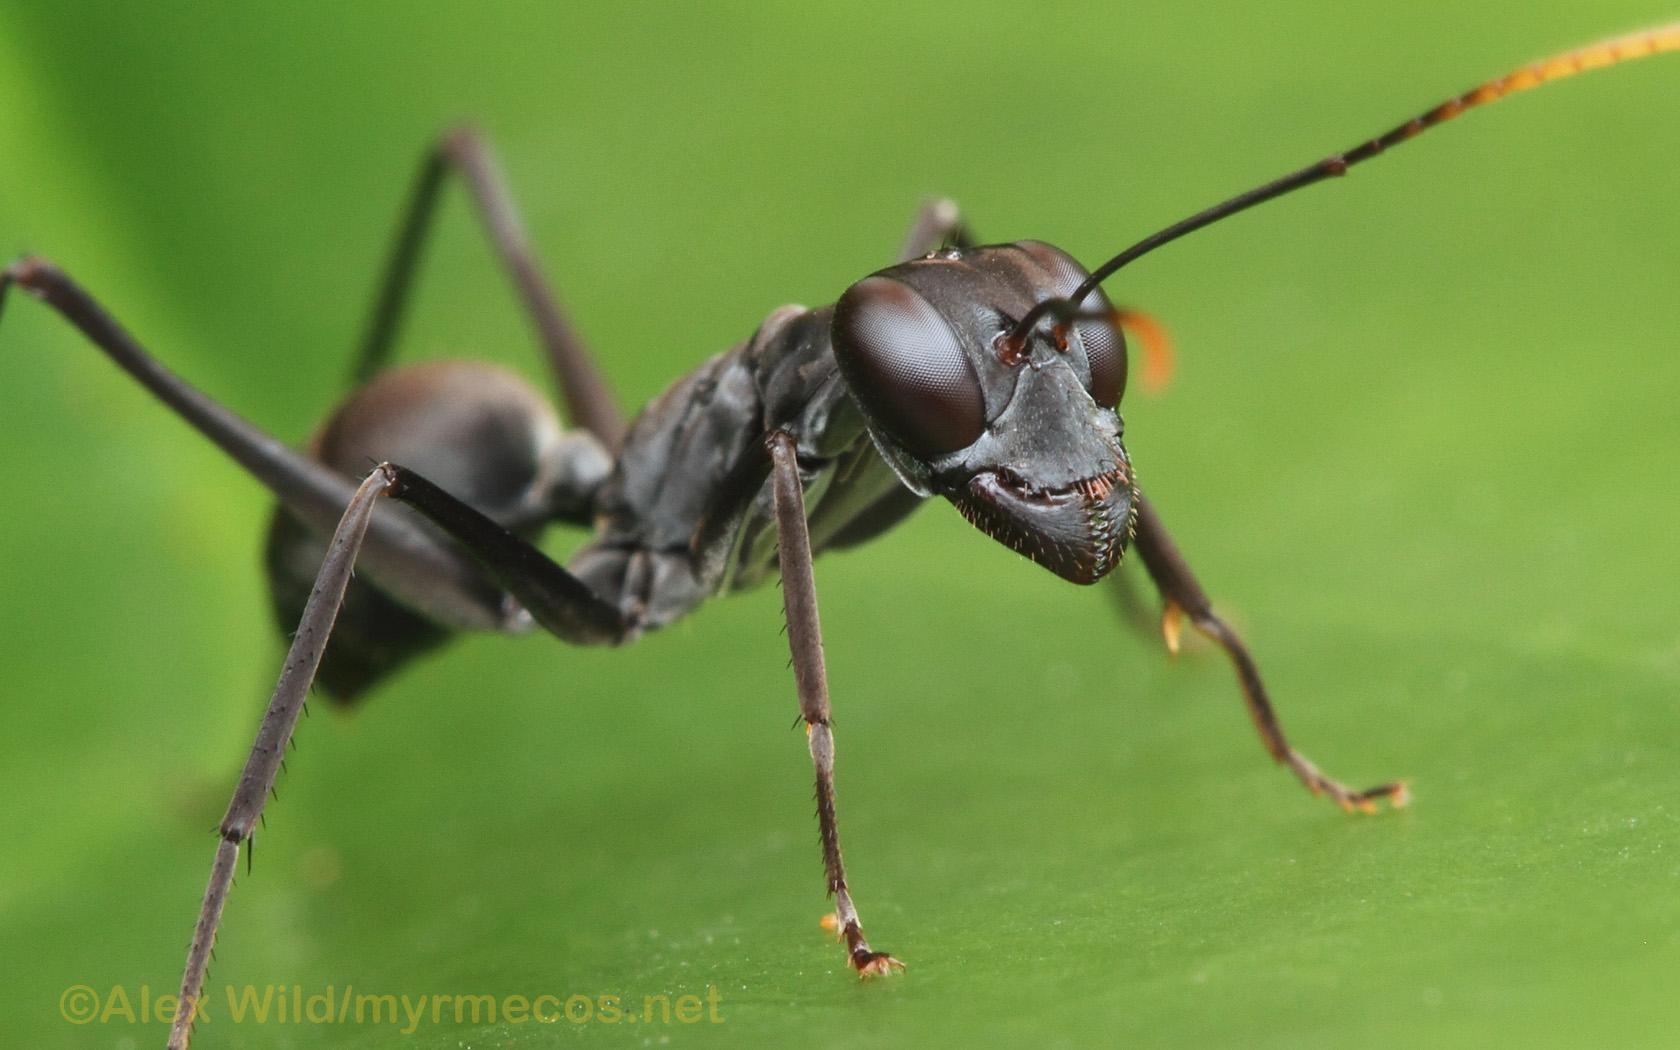 Ant Laptop Wallpaper, Ant, Animal